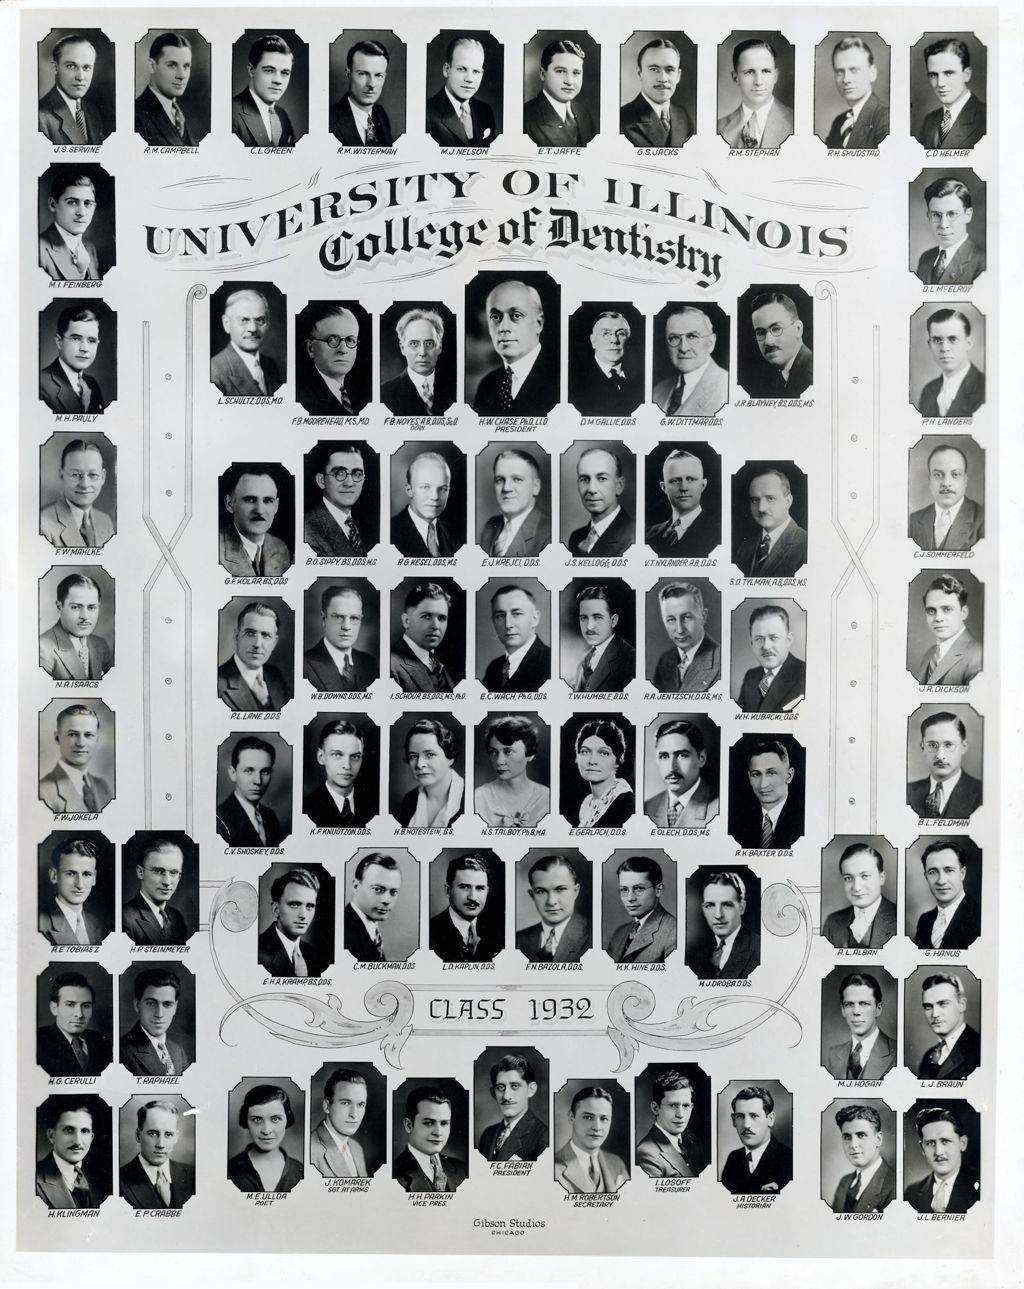 Miniature of 1932 graduating class, University of Illinois College of Dentistry